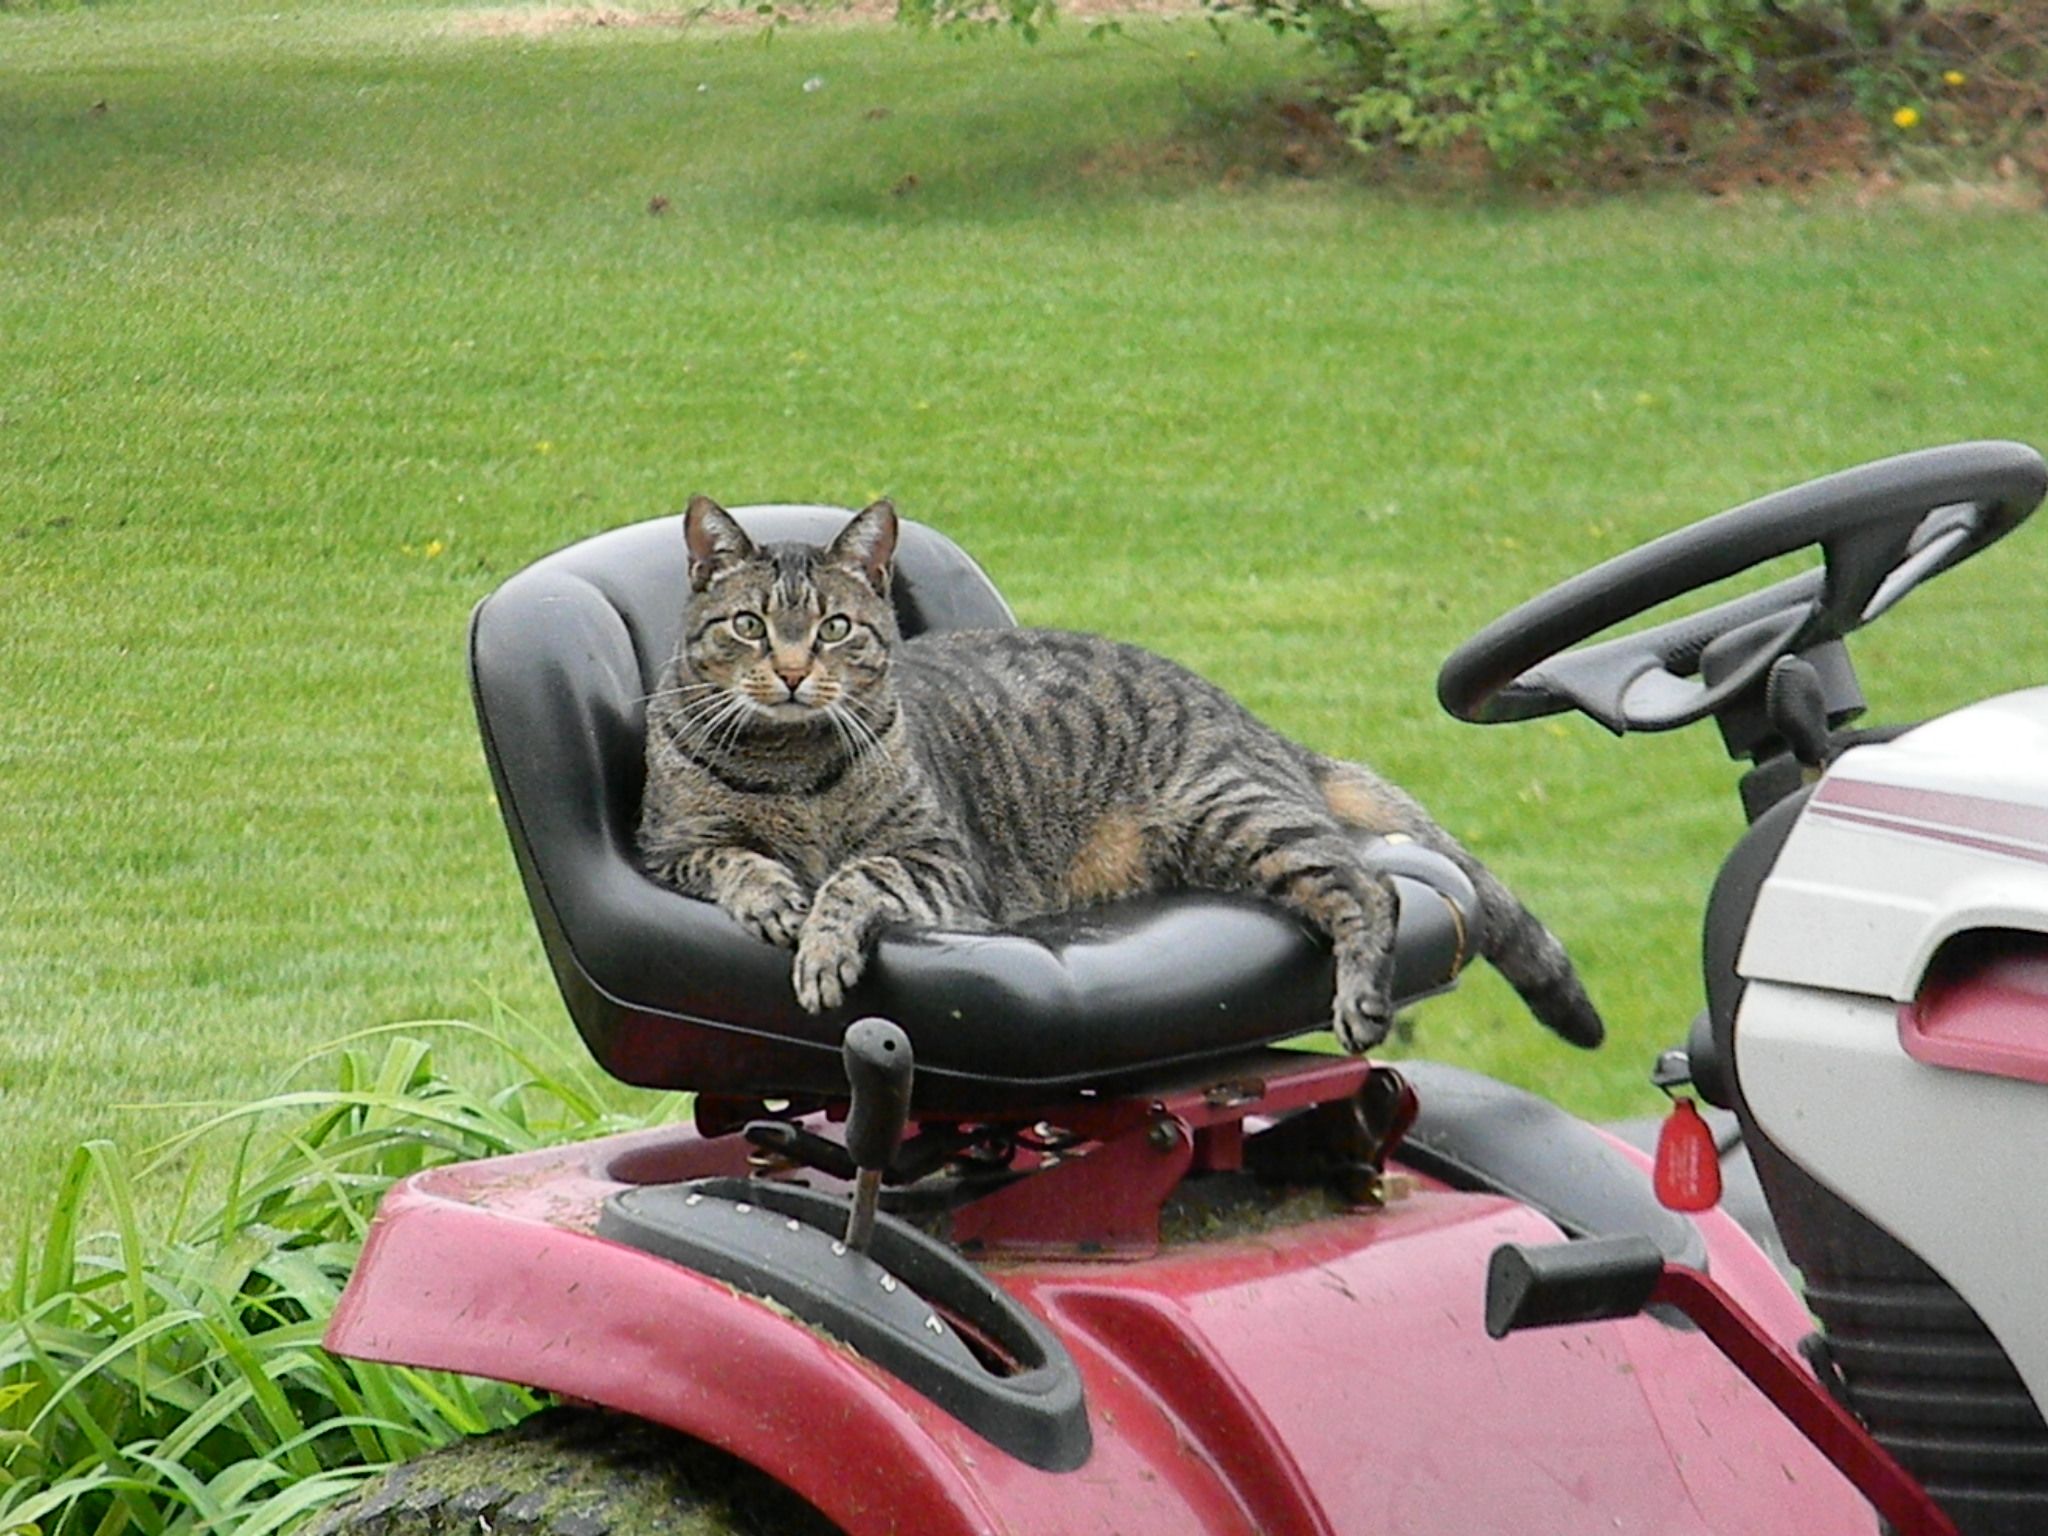 Lawn mower kitty | Lawn mower, Mower, Lawn